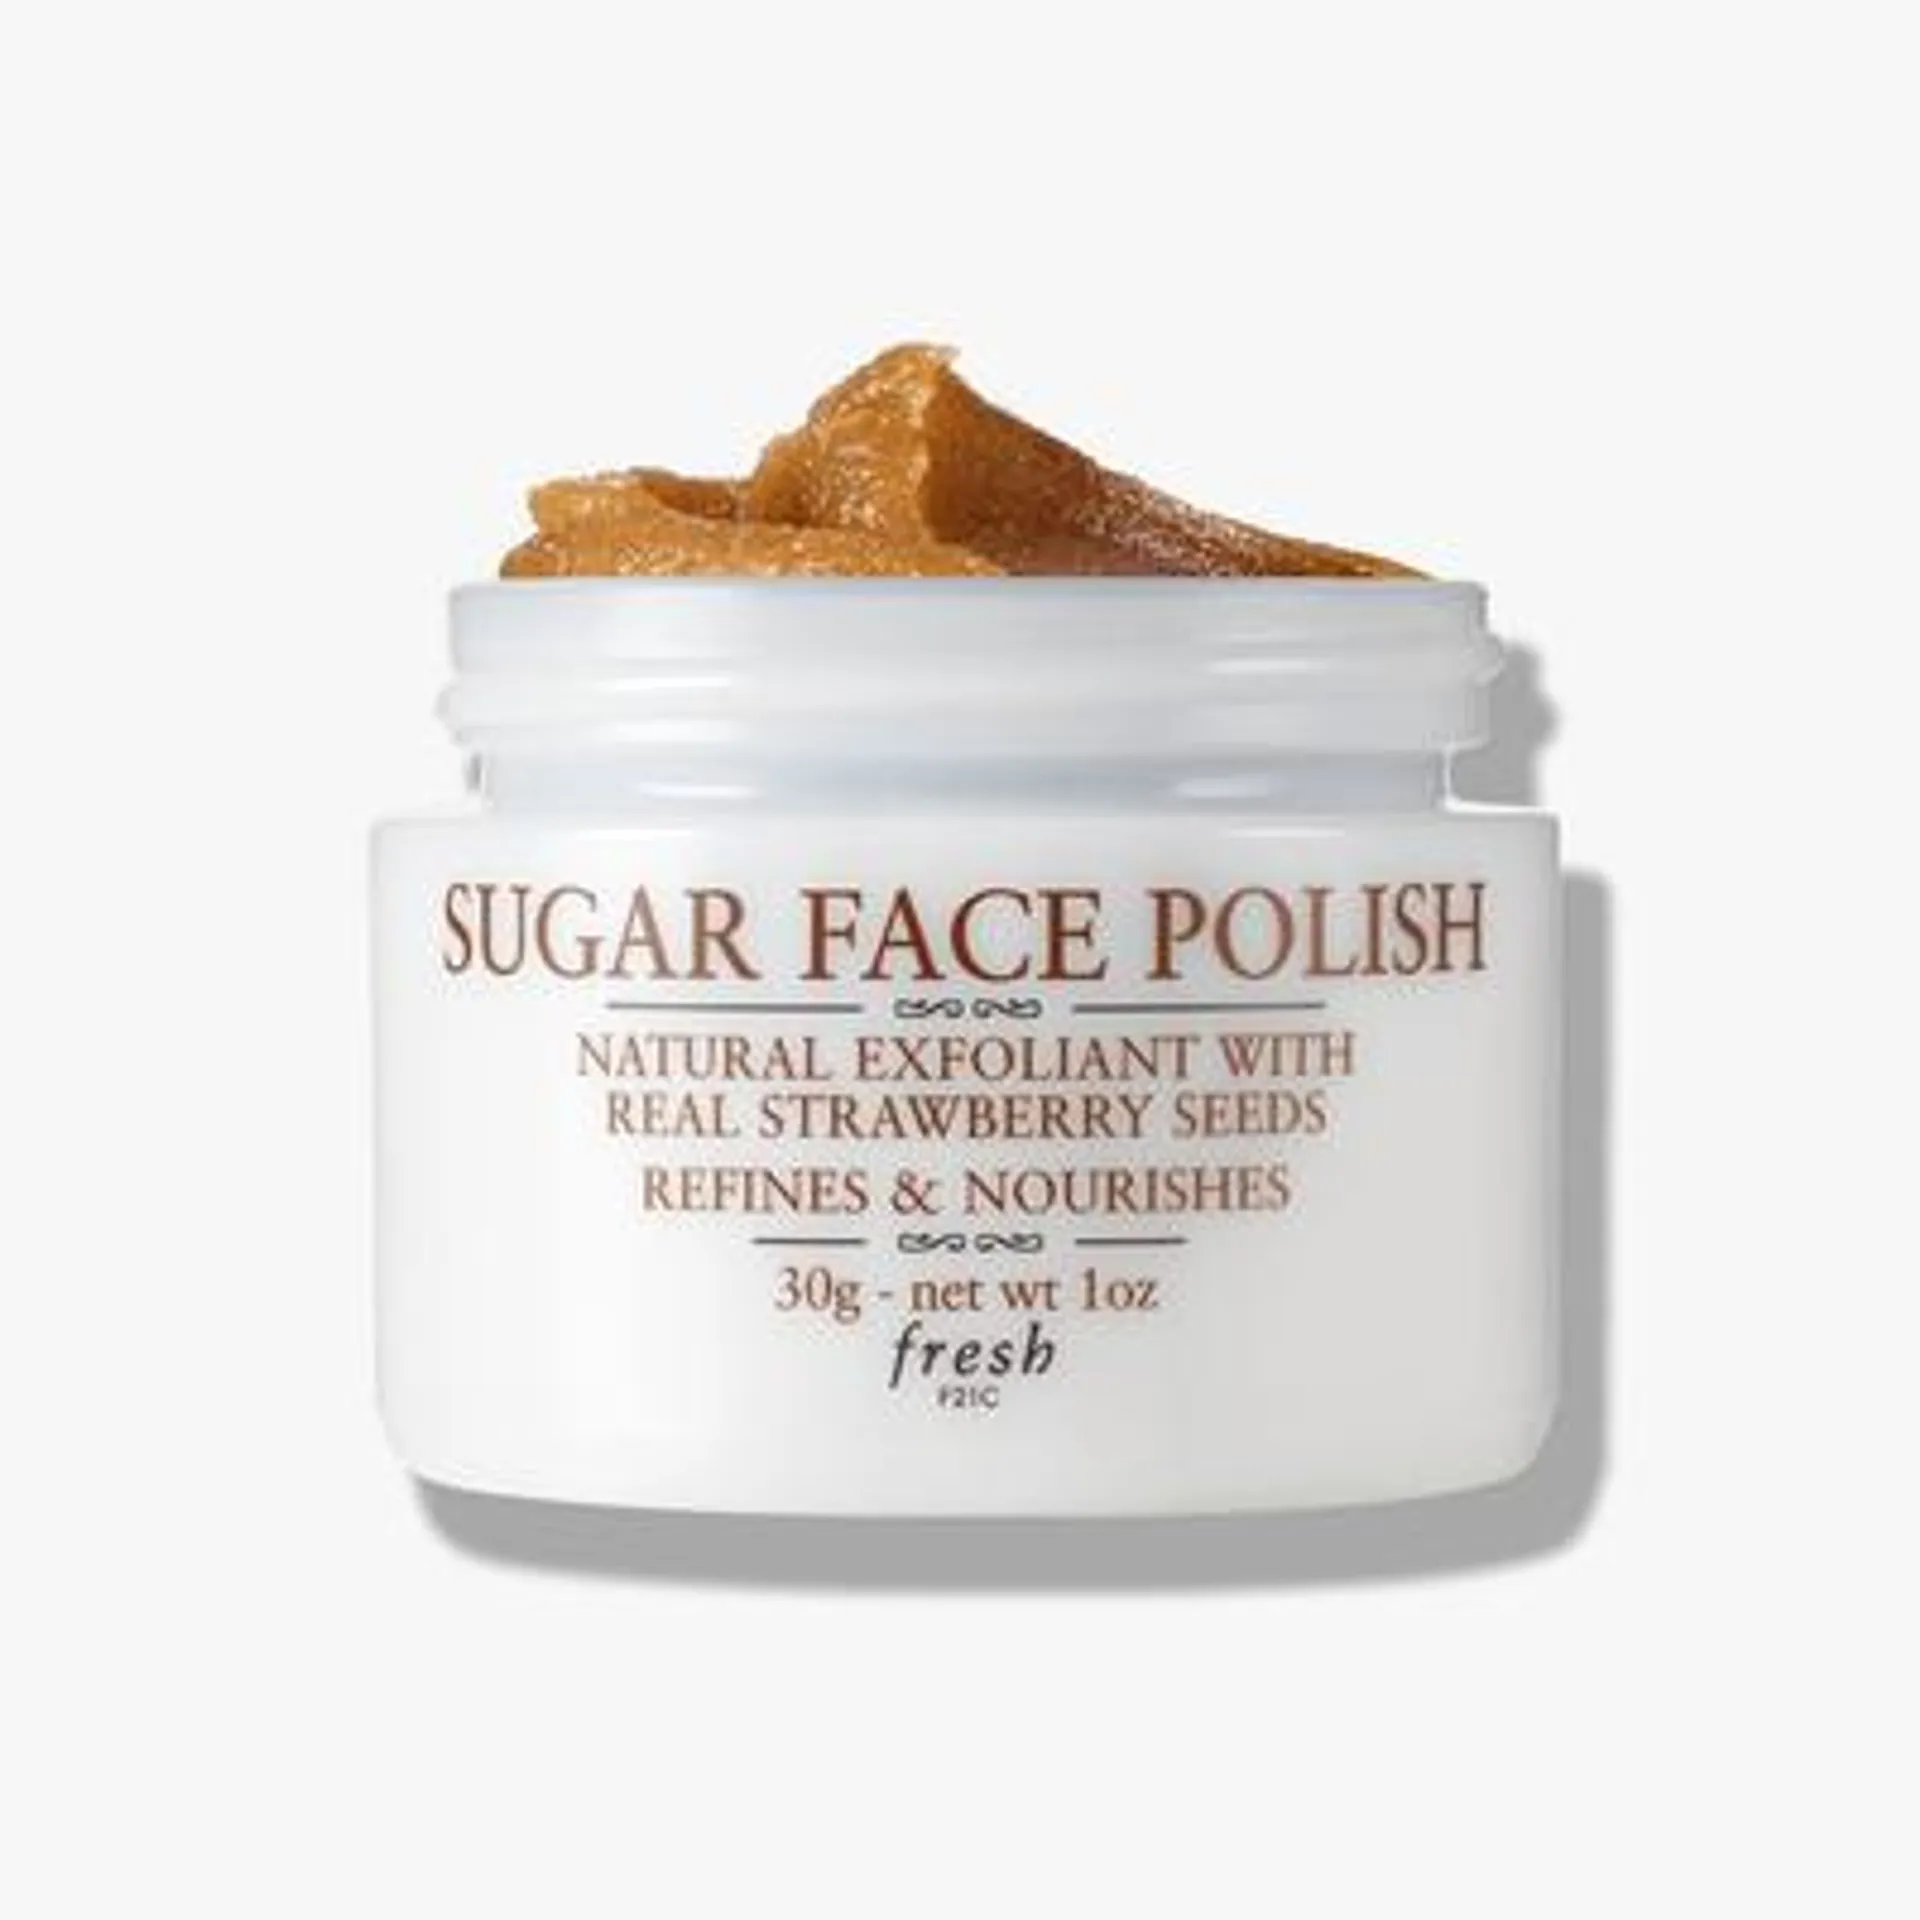 Sugar Face Polish Exfoliator